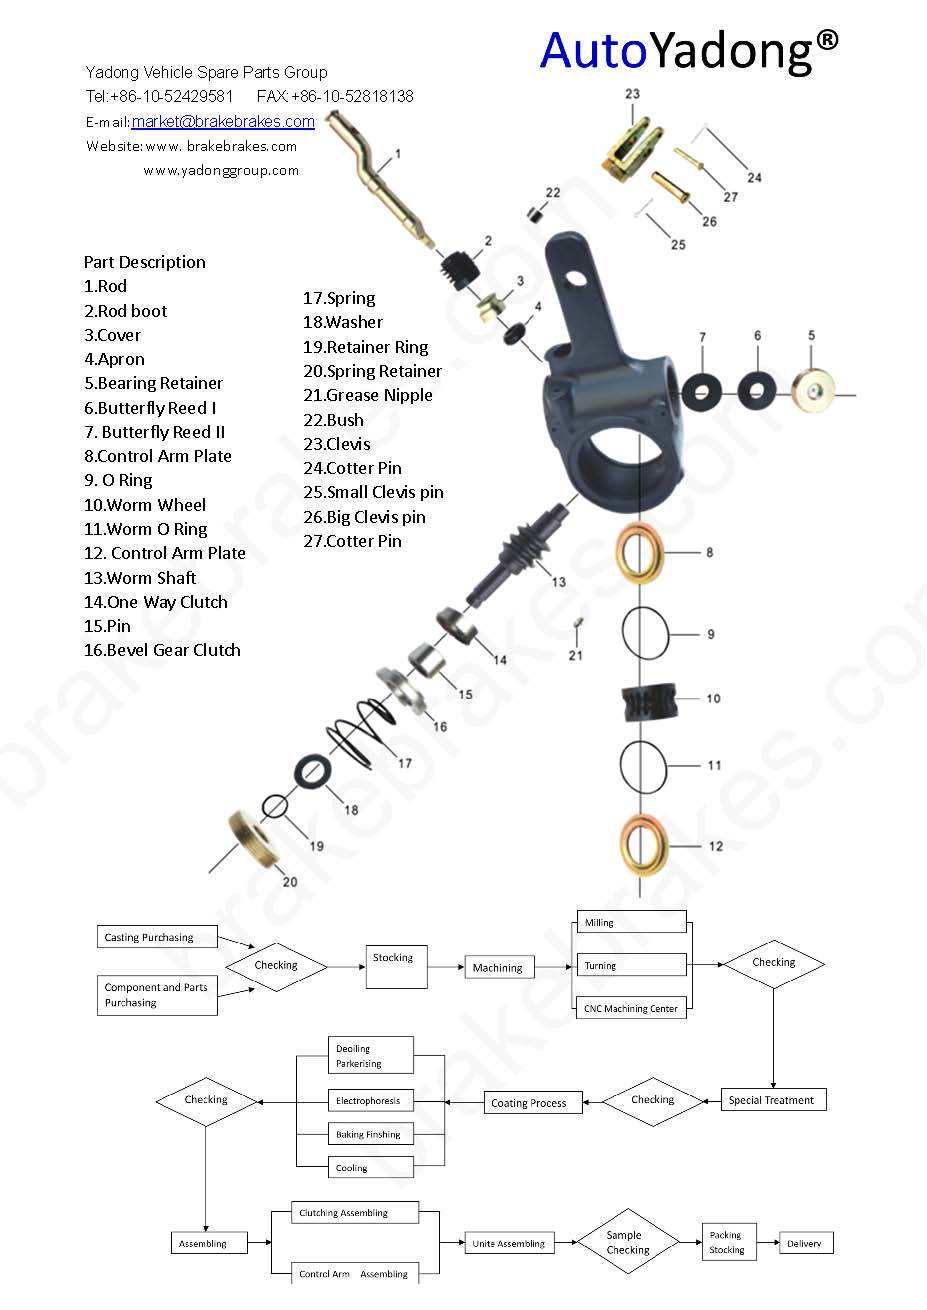 Scania Slack Adjuster 267026/267027, Brake Adjuster/Brake Parts/Truck Parts/Heavy Duty Parts